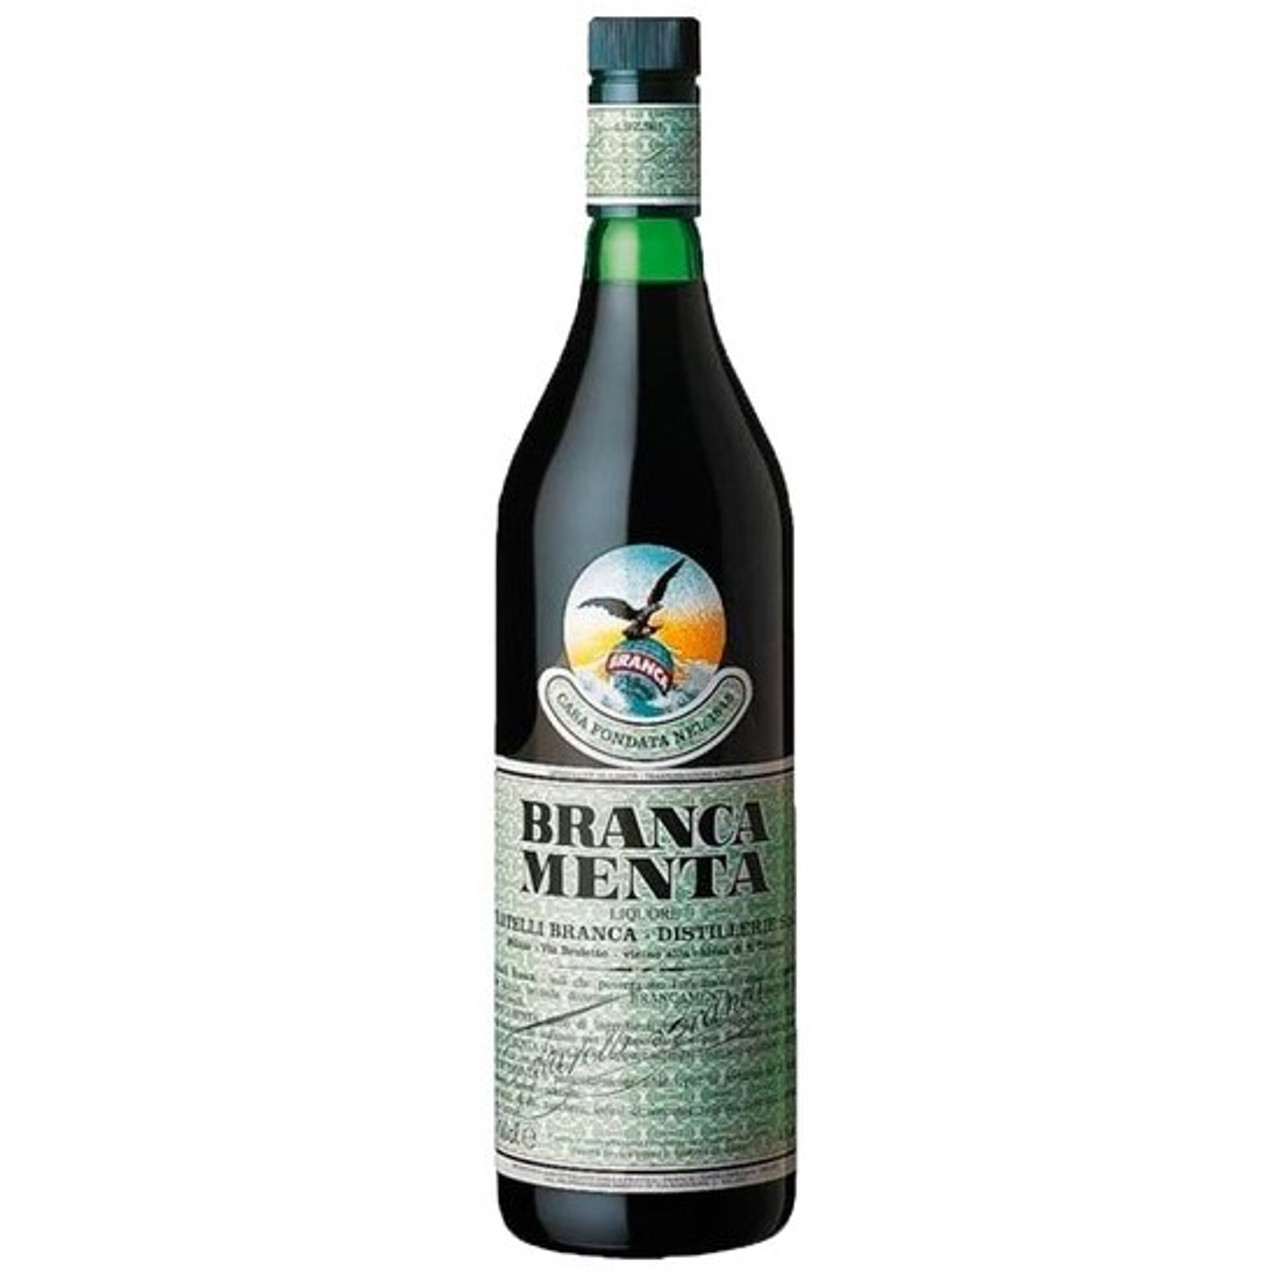 Fernet-Branca Amaro Bitters - Milano, Italy (750ml) - GNARLY VINES